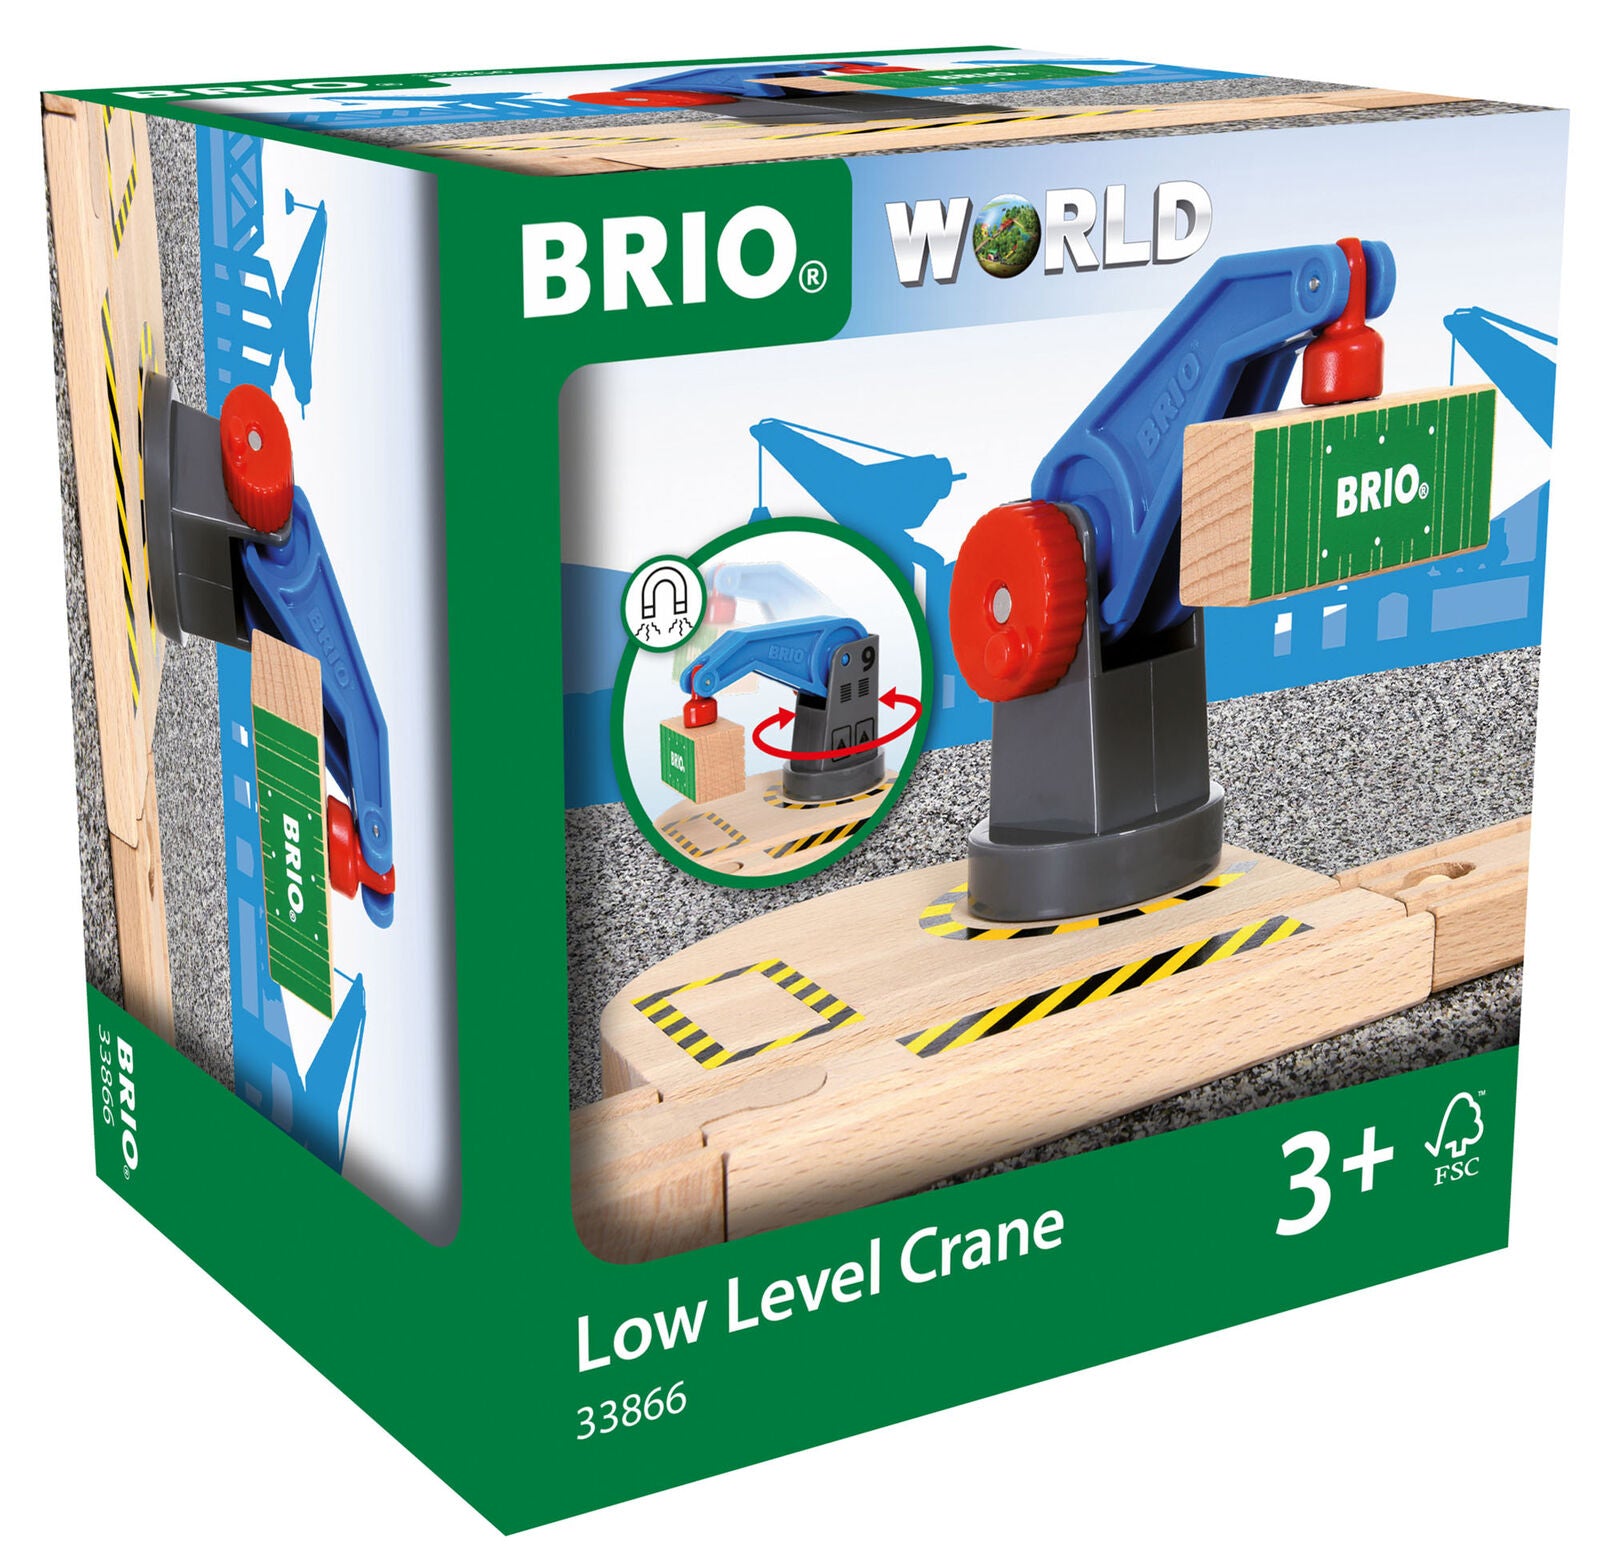 33866 BRIO Low Level Crane Wood & Plastic Train Railway Accessory with Magnet 3+